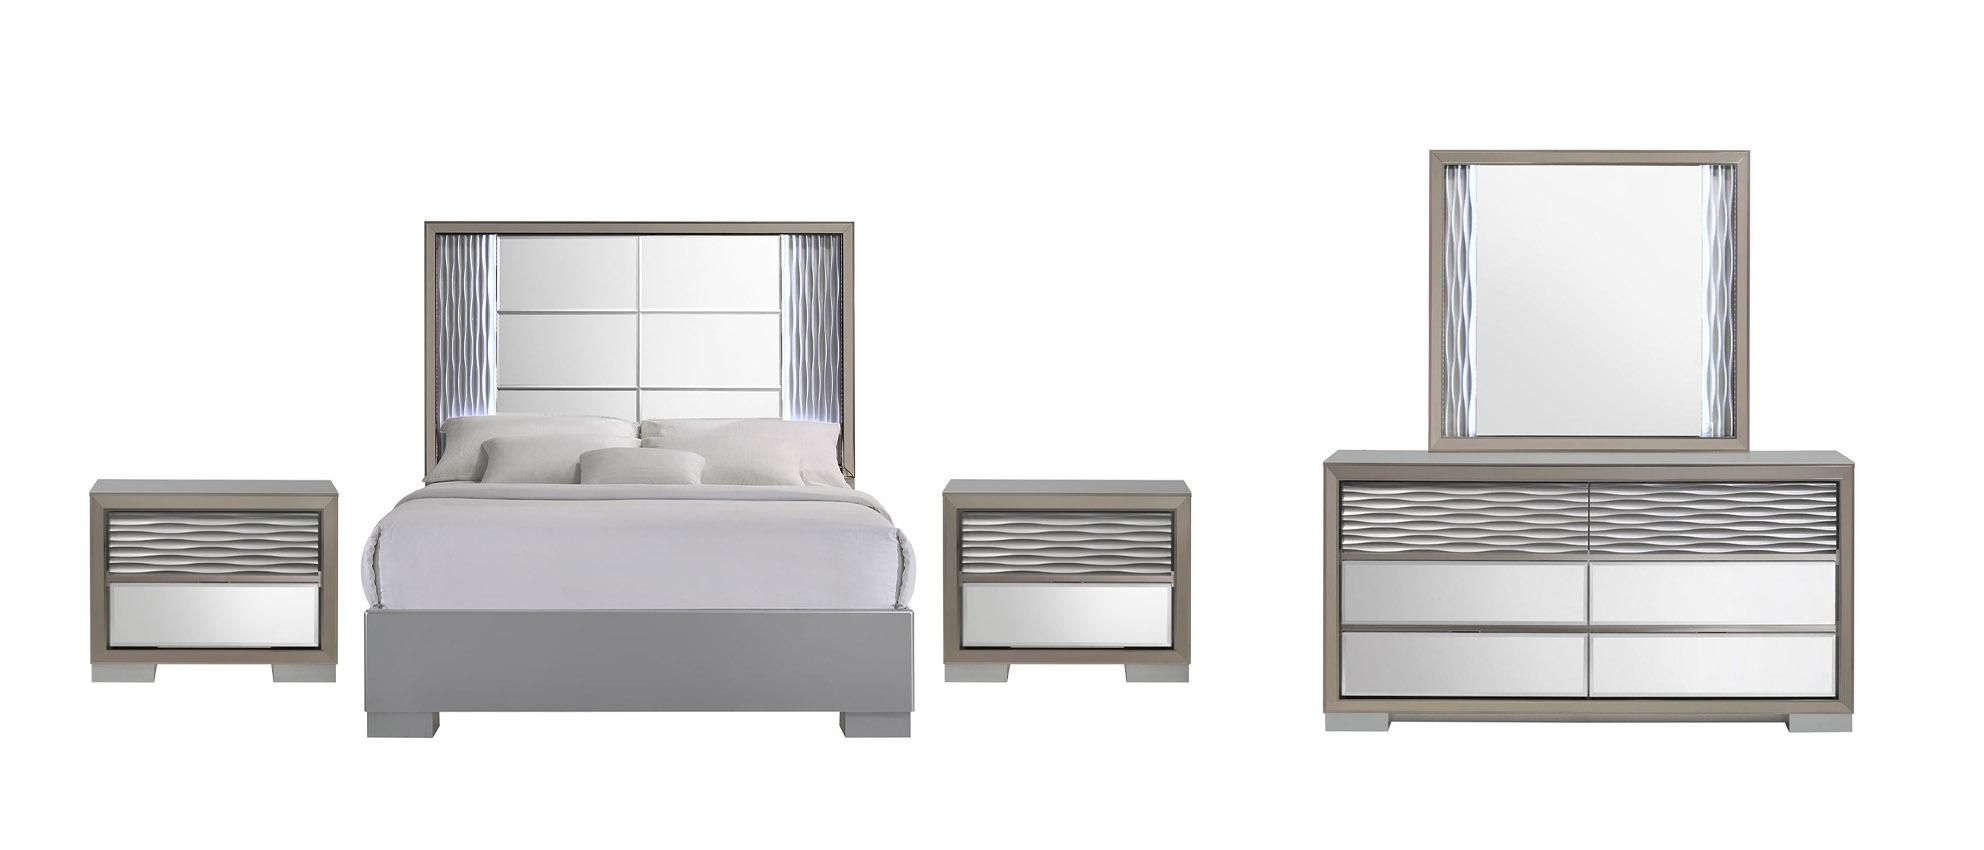 Contemporary Platform Bedroom Set SKYLINE SKYLINE-SILVER-QB-Set-5 in Mirrored, Silver 